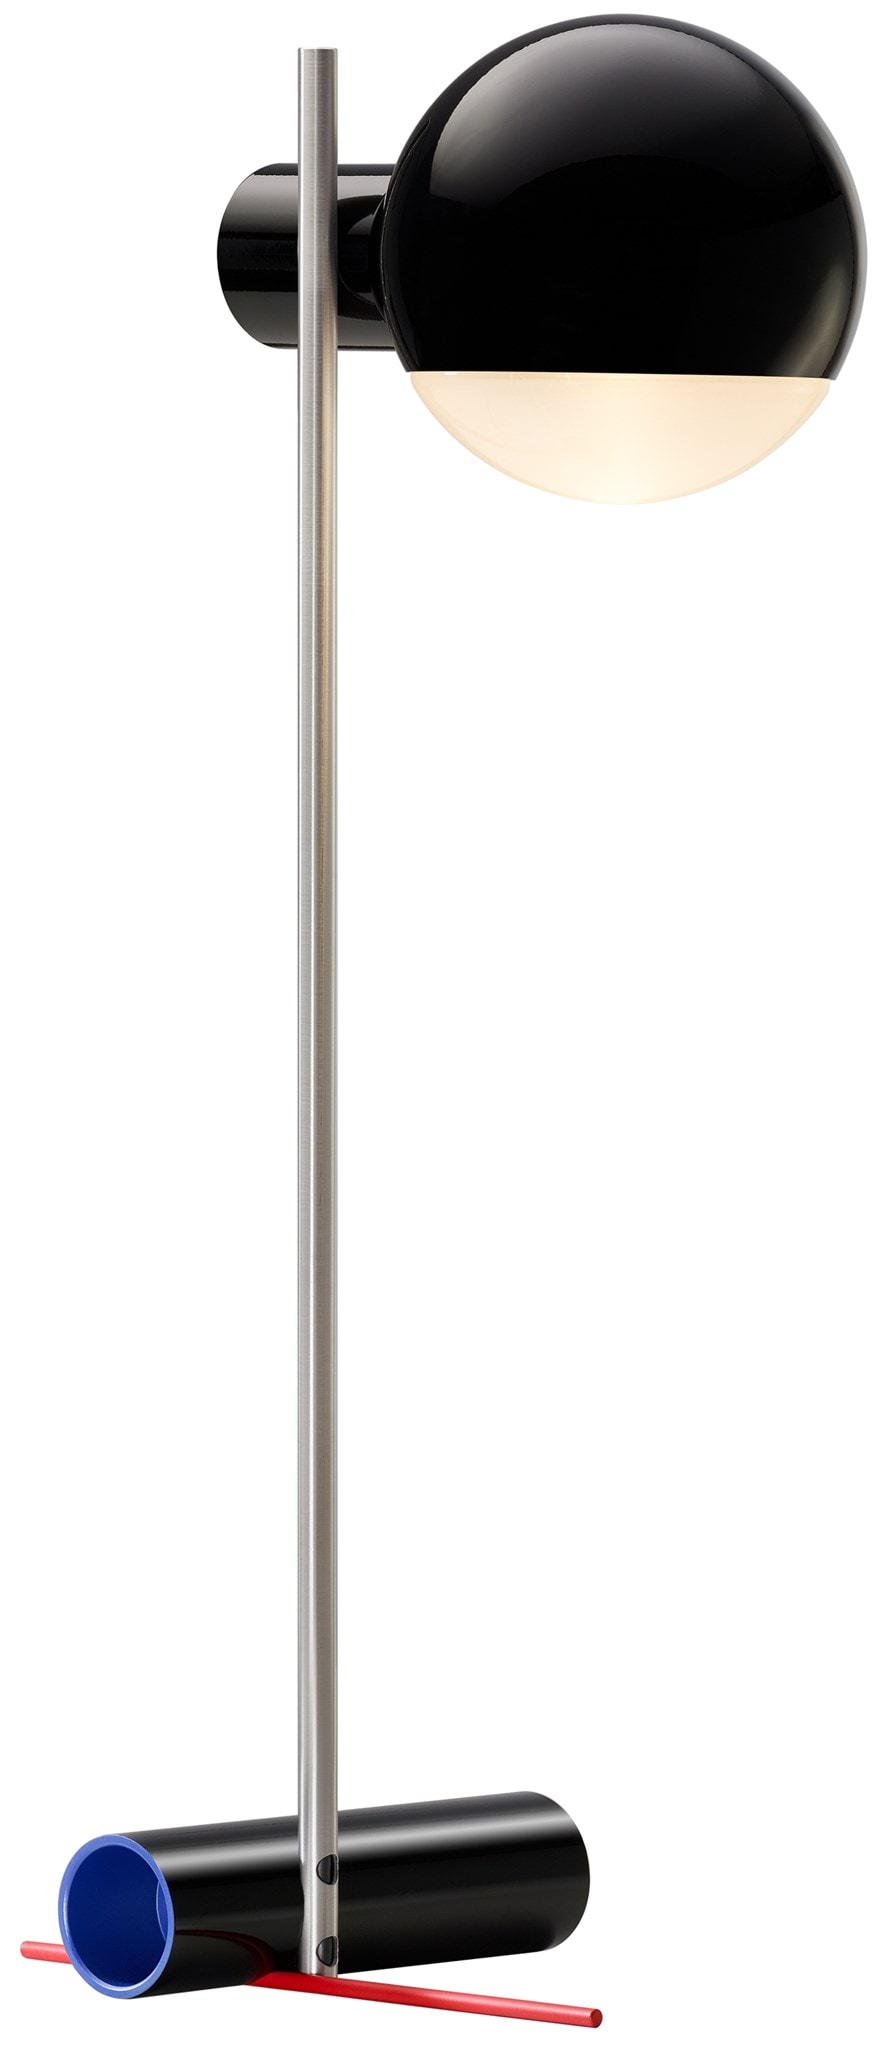 Versterker kreupel Kostuums L25 Lamp - Gerrit Rietveld. Bauhaus Movement